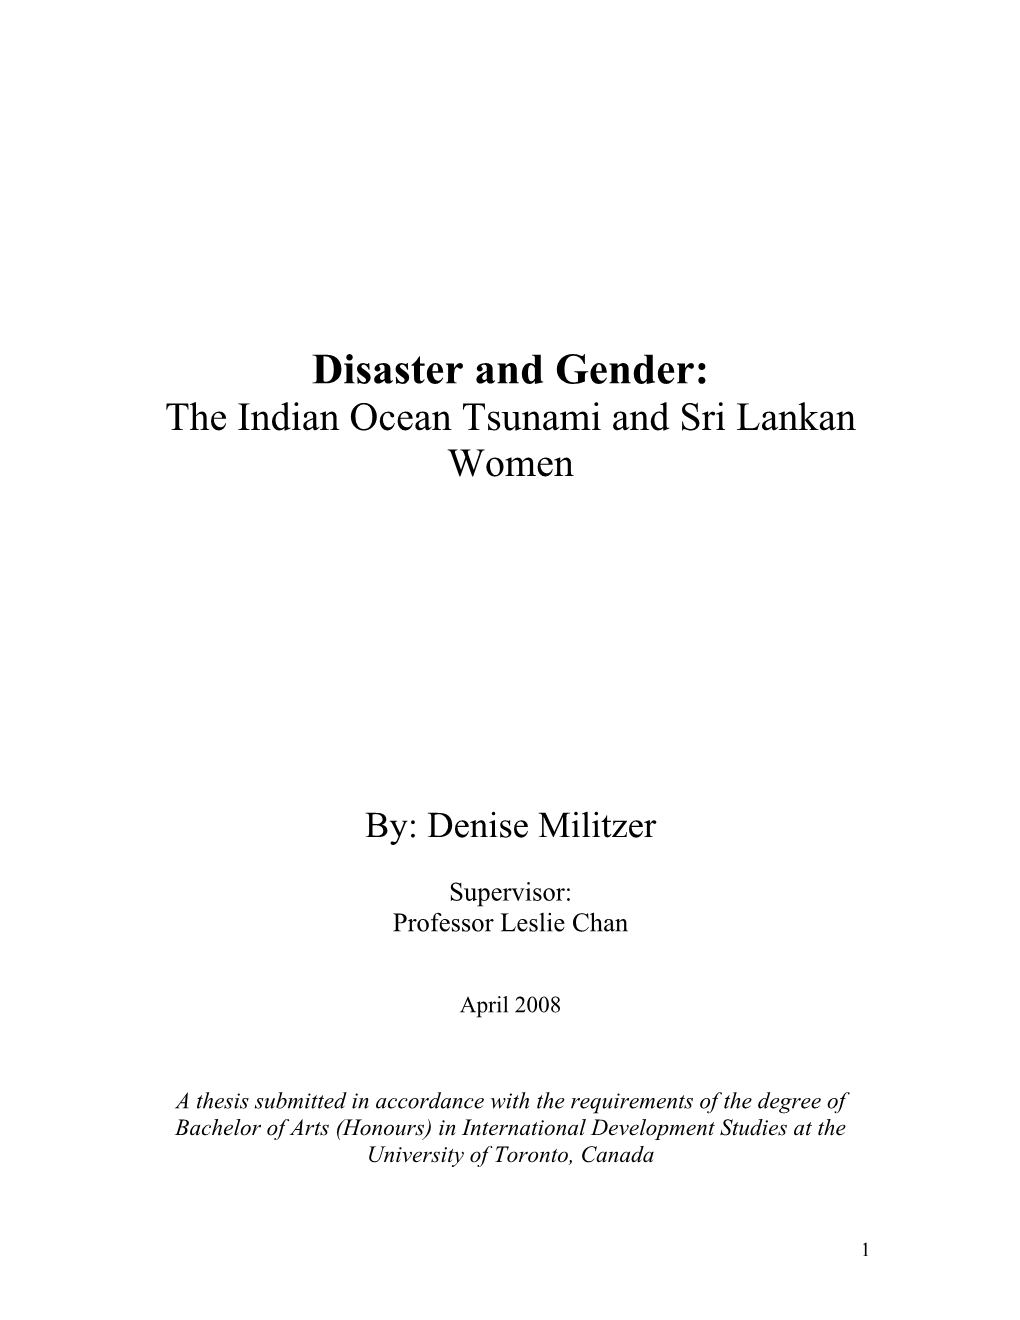 Disaster and Gender: the Indian Ocean Tsunami and Sri Lankan Women